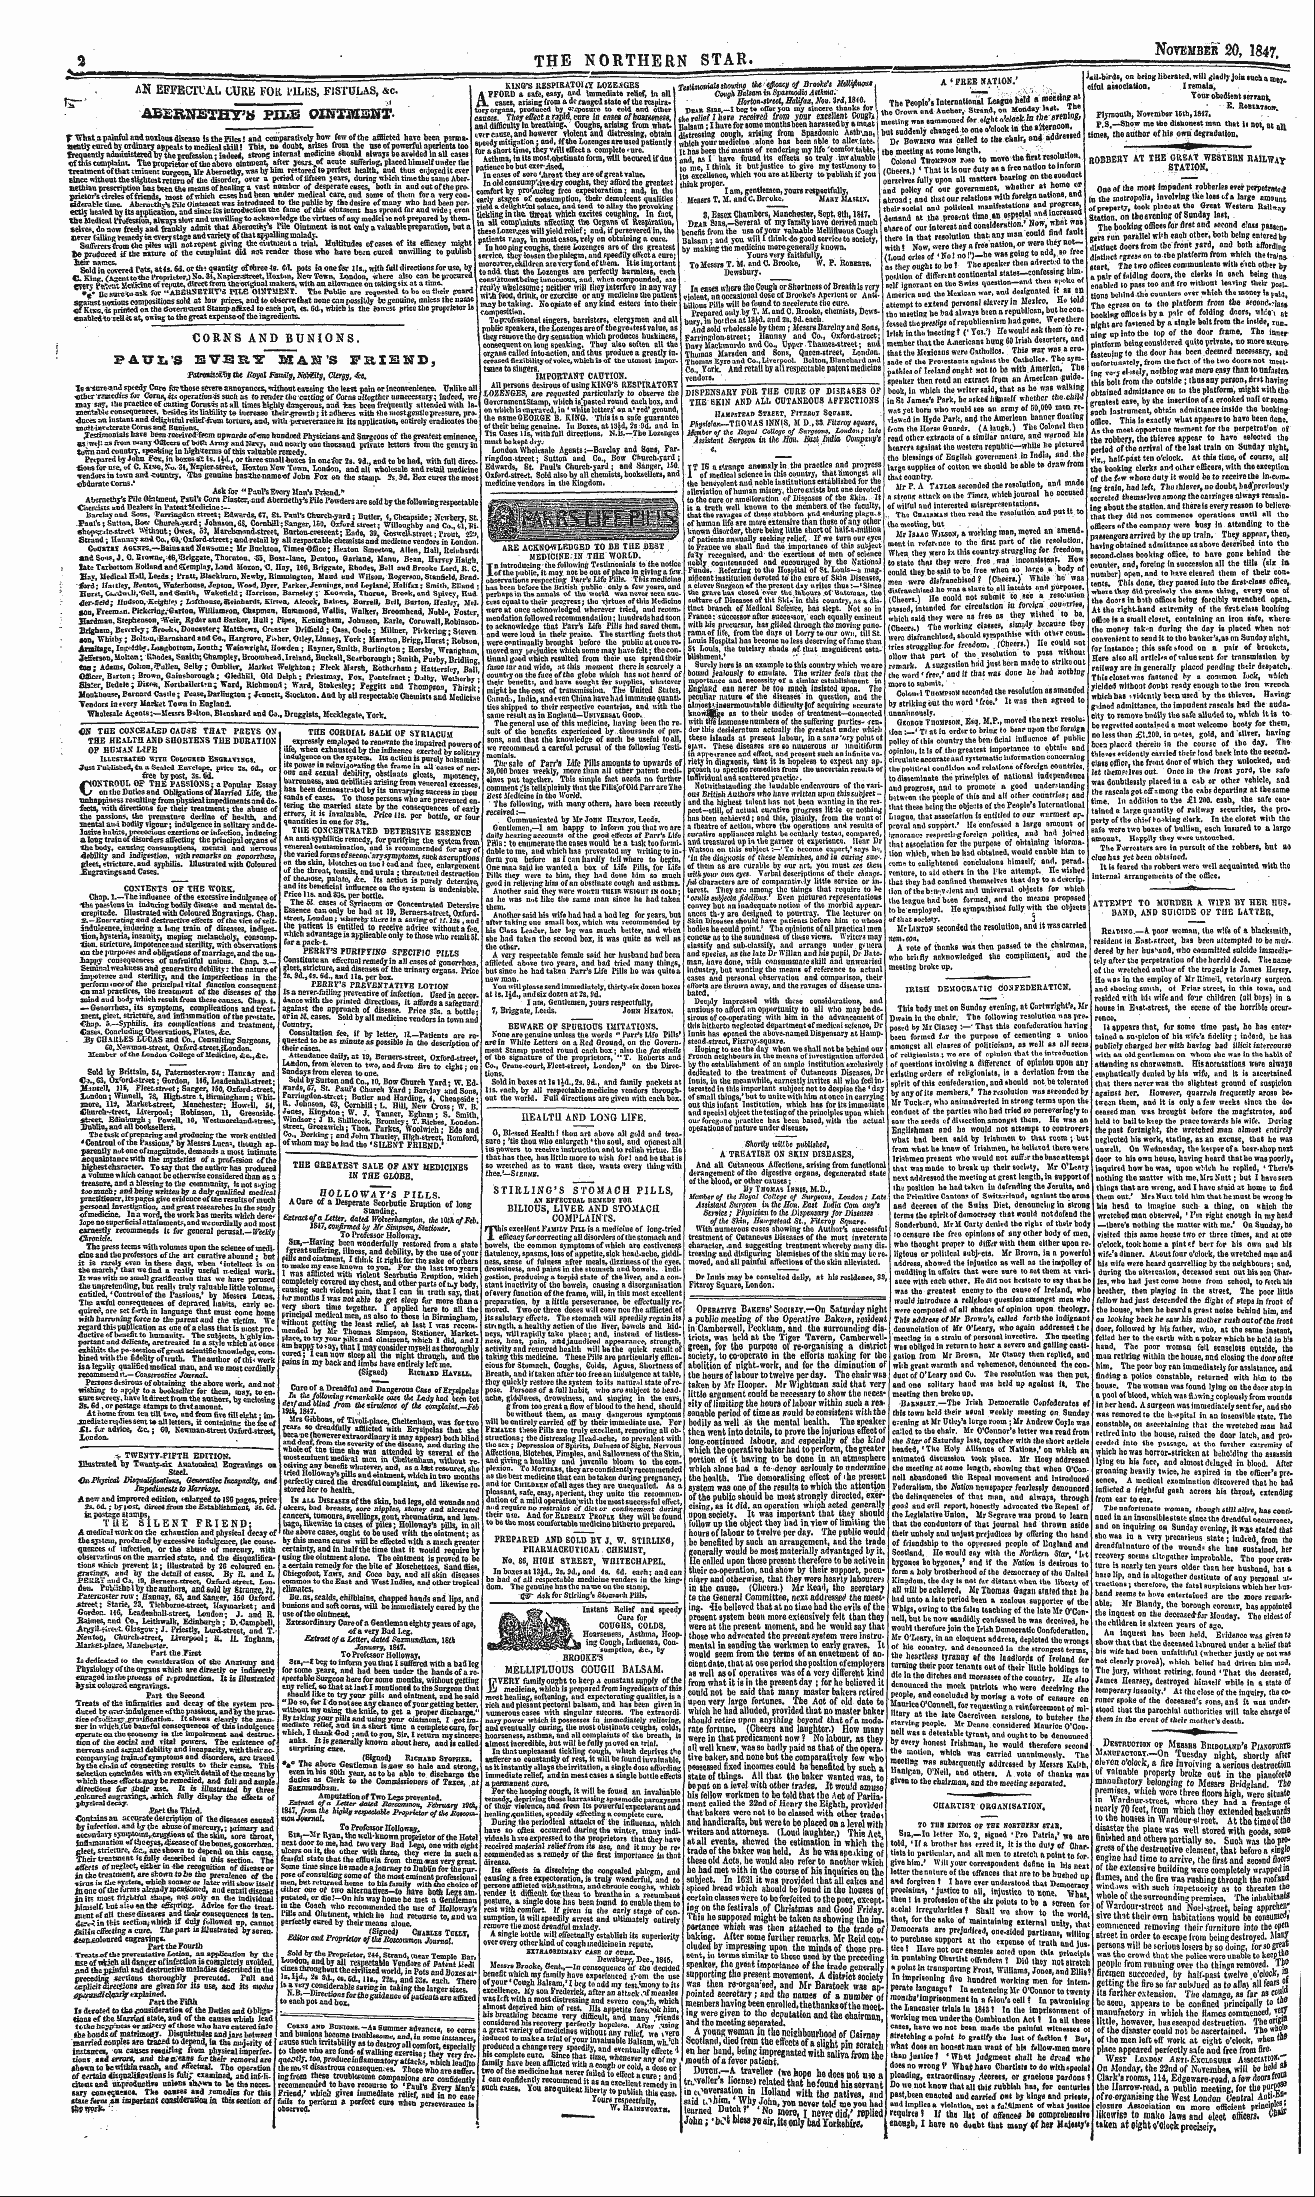 Northern Star (1837-1852): jS F Y, 3rd edition - Ad00221